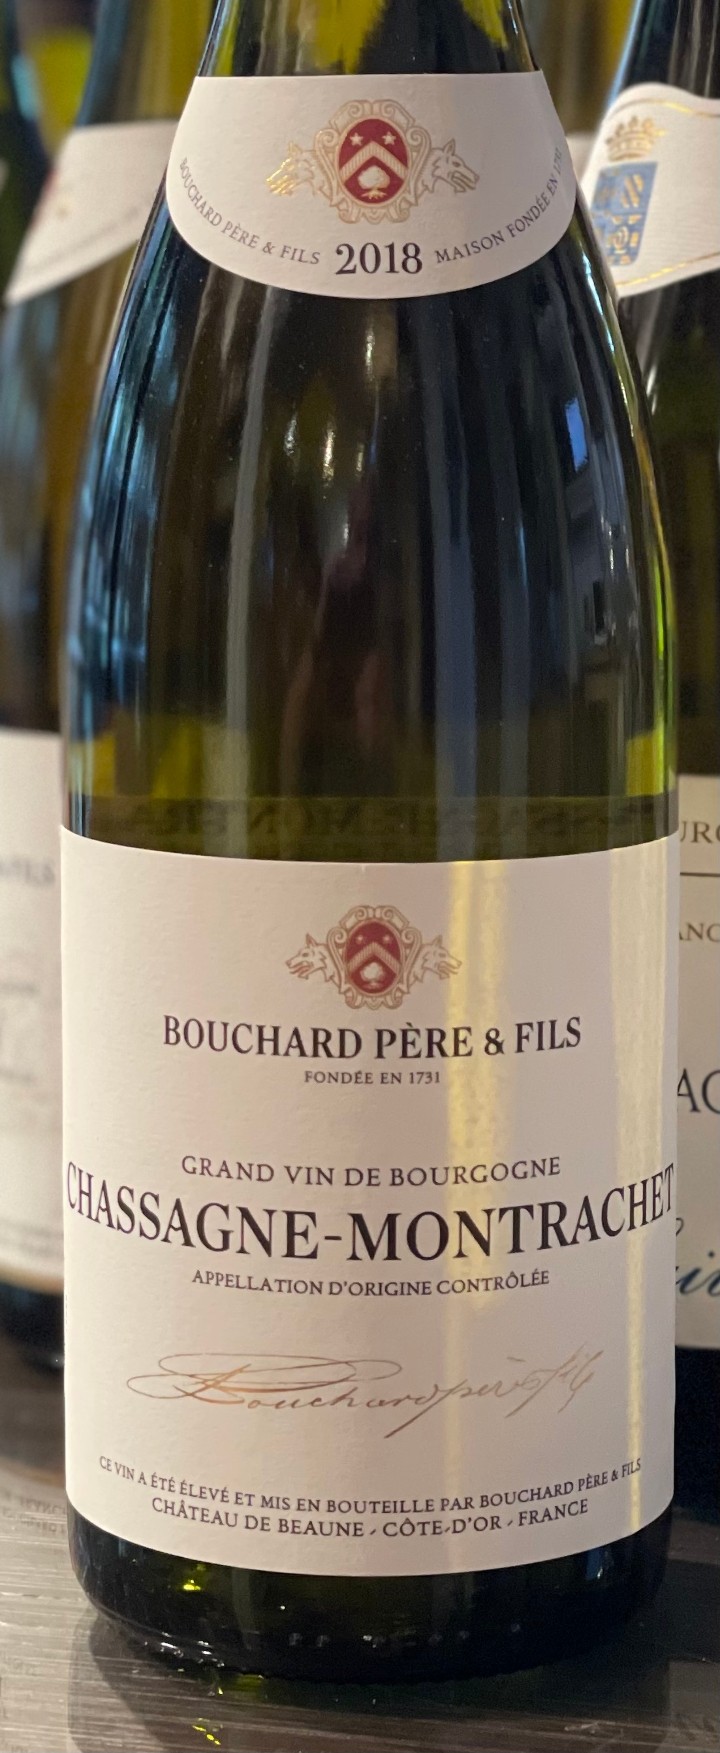 Bouchard Pere & Fils Chassagne- Montrachet Grand Vin 2019